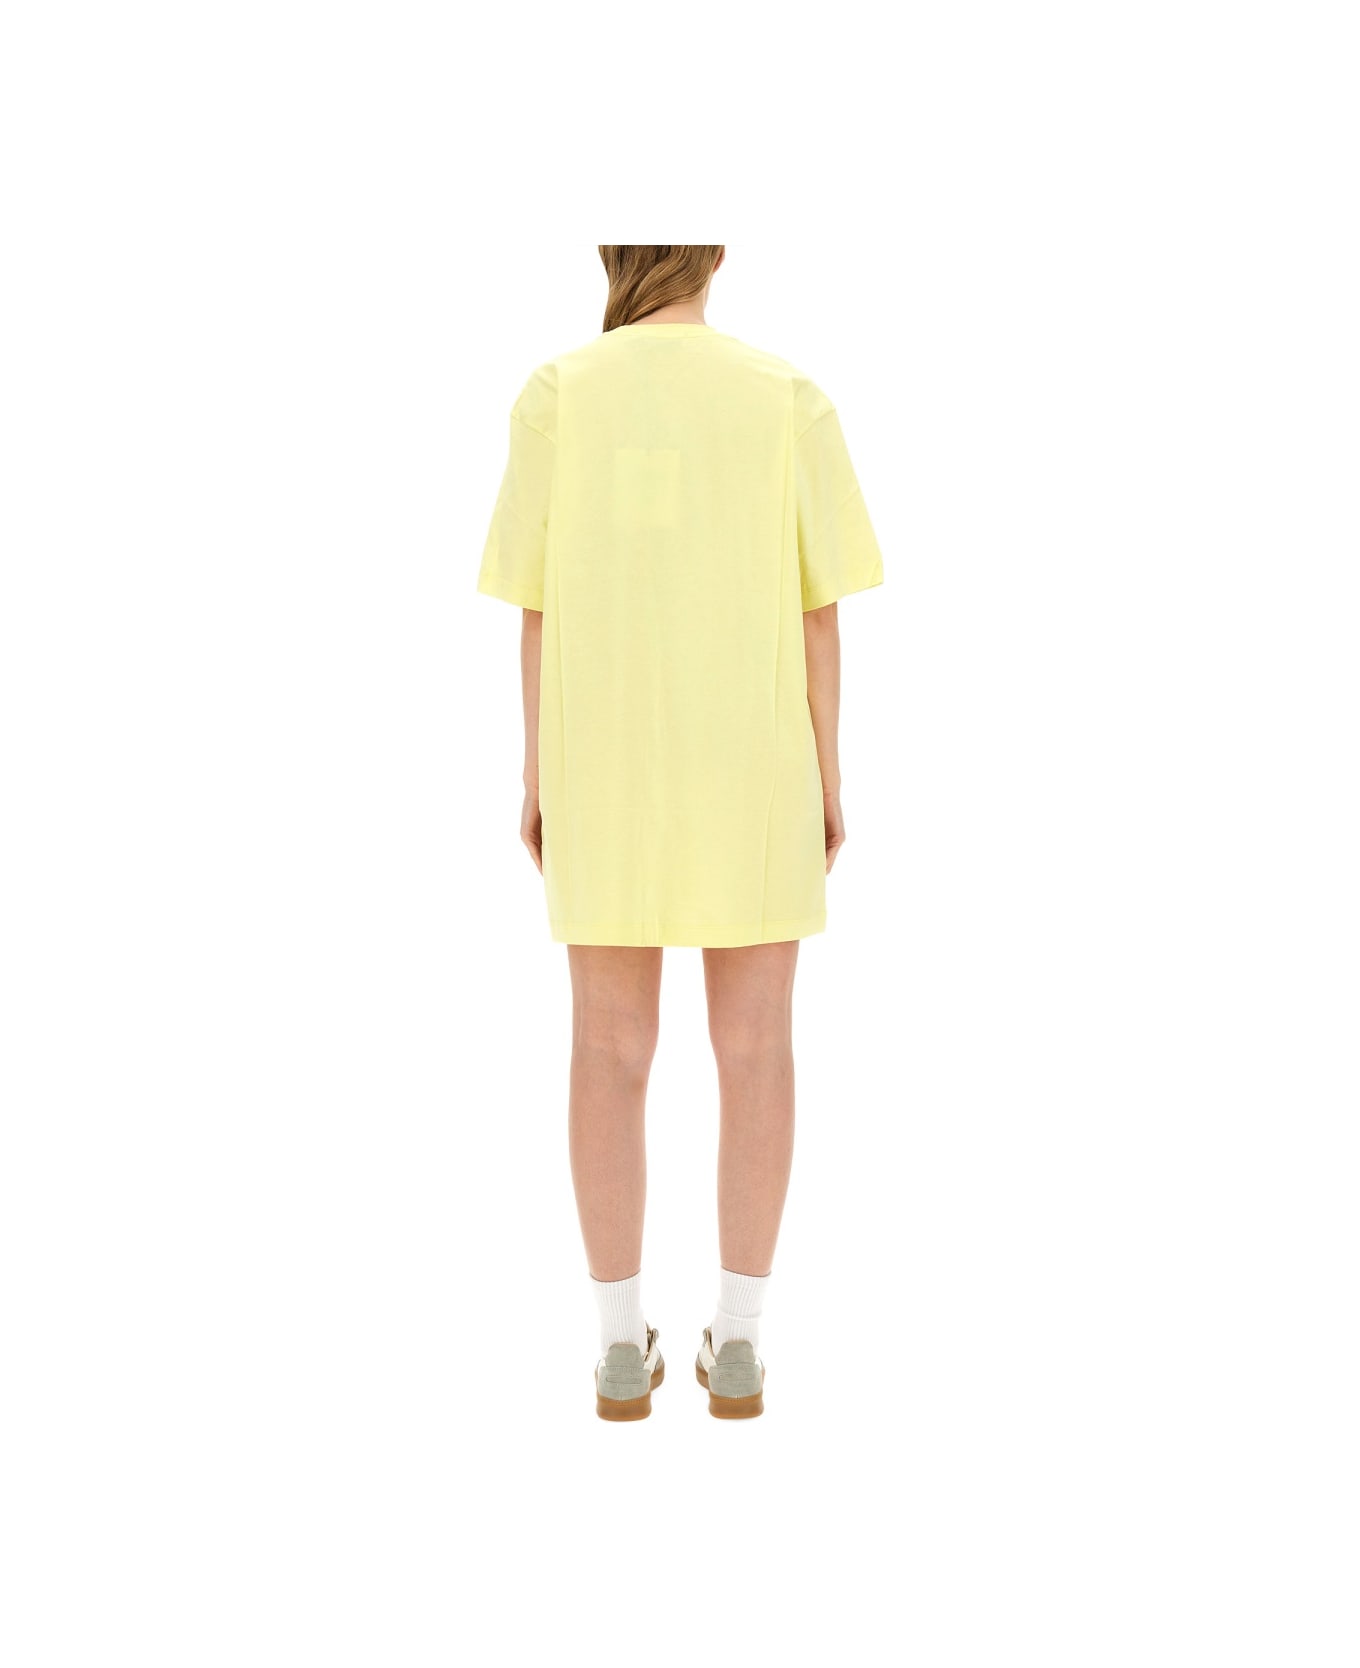 MSGM T-shirt Dress - YELLOW